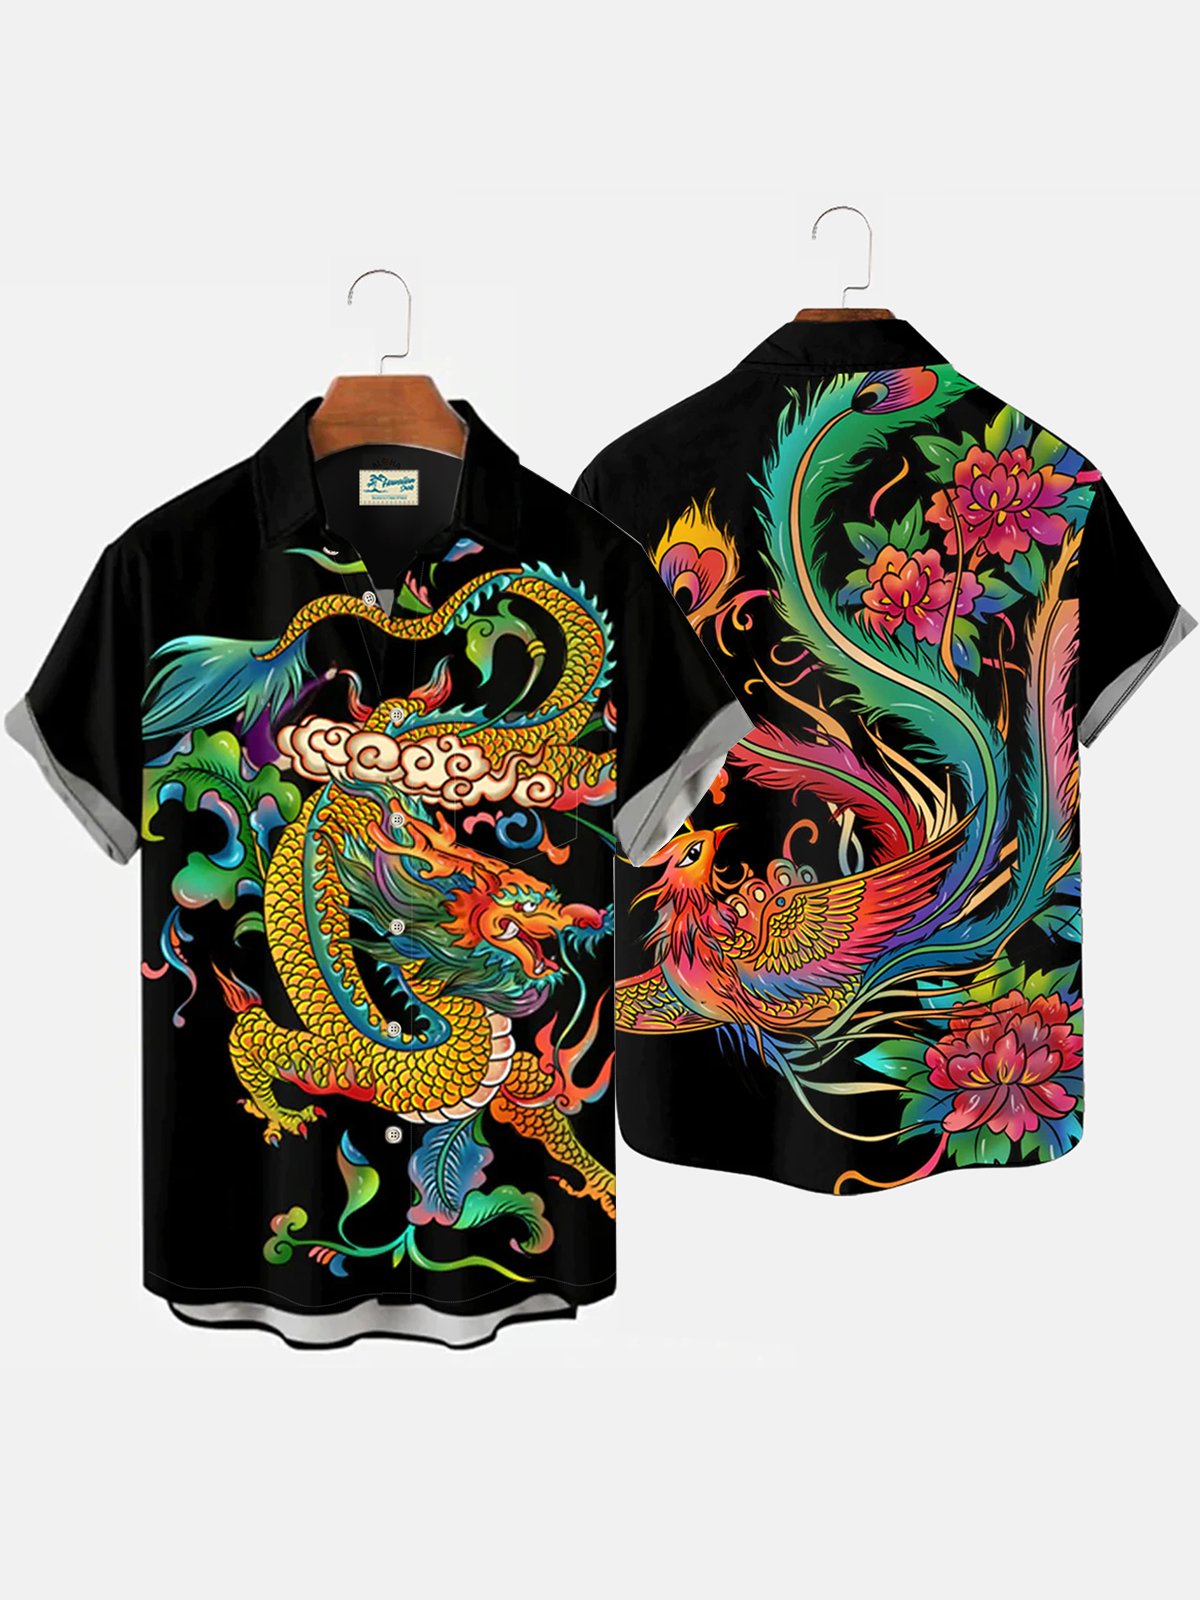 Royaura Black Vintage Dragon Print Breast Pocket Shirt Plus Size Shirt